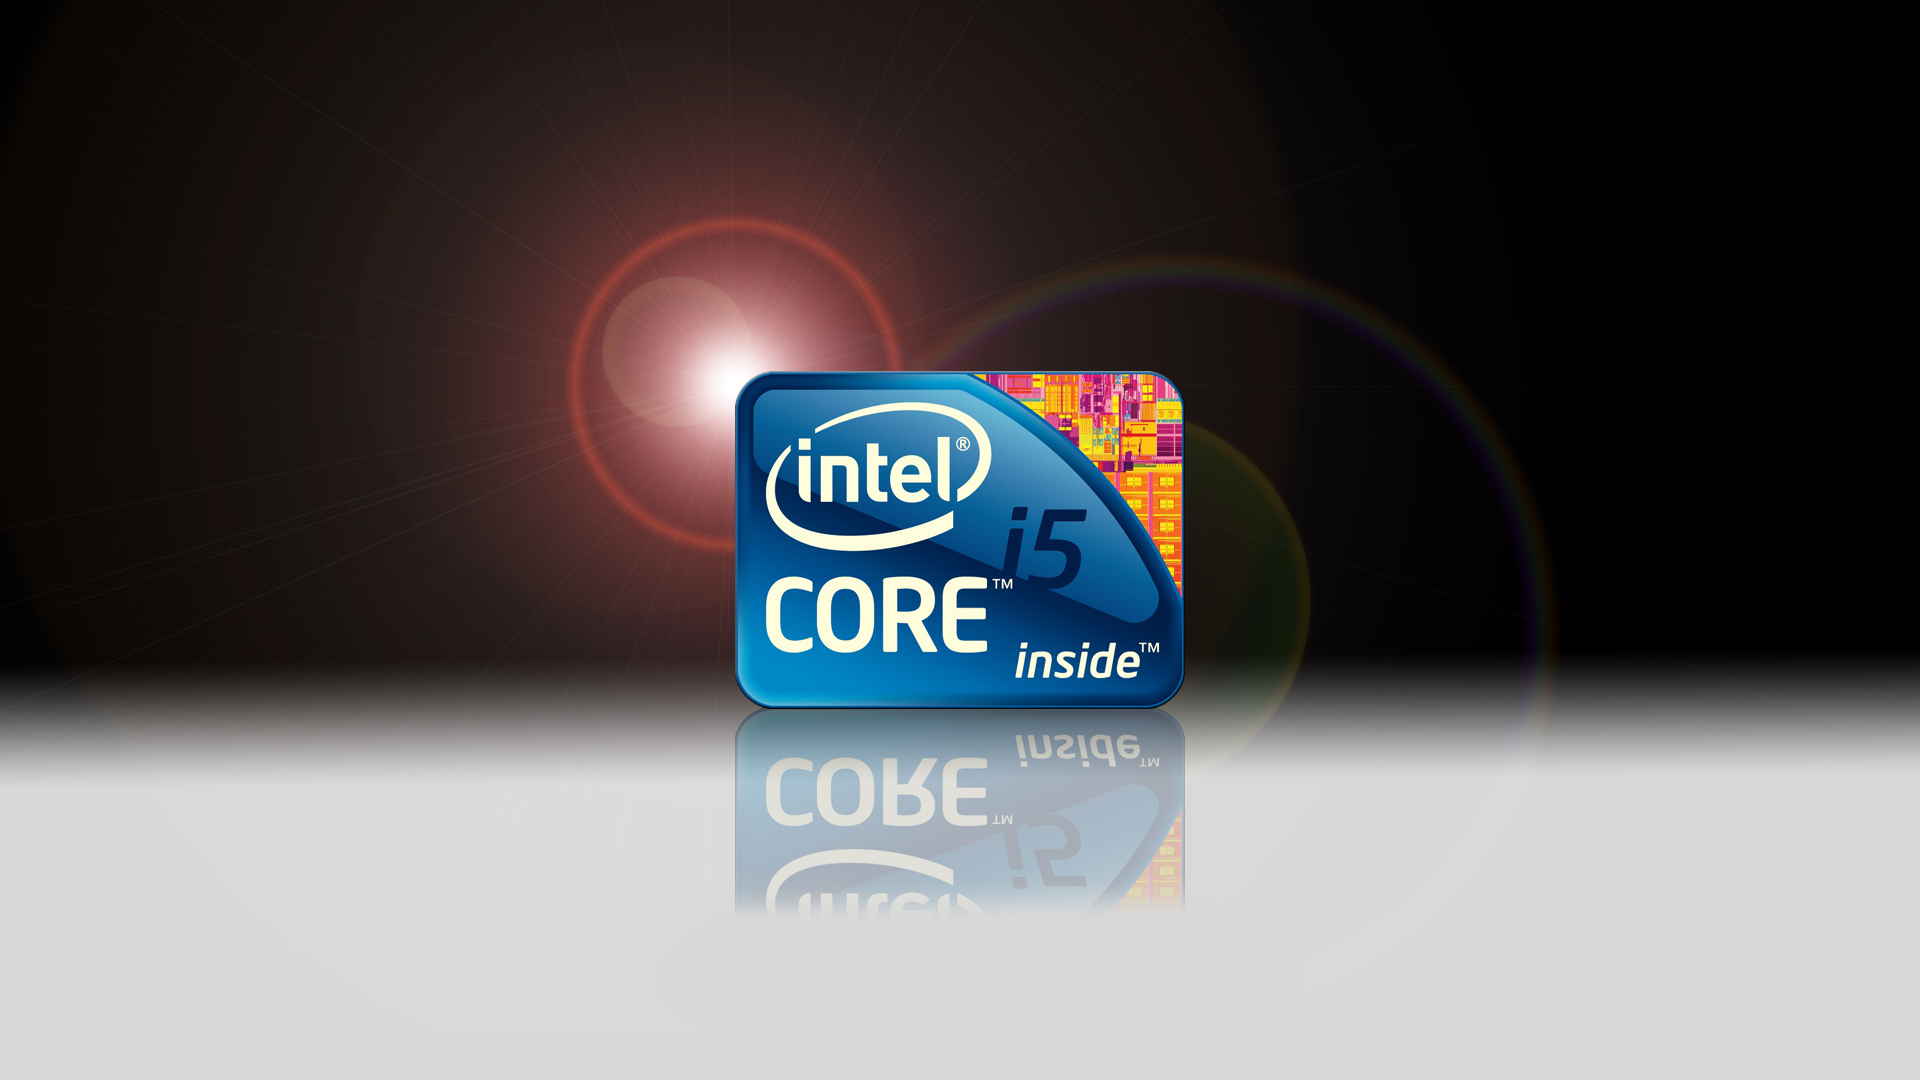 Intel Core I5 Puter Wallpaper Desktop Background